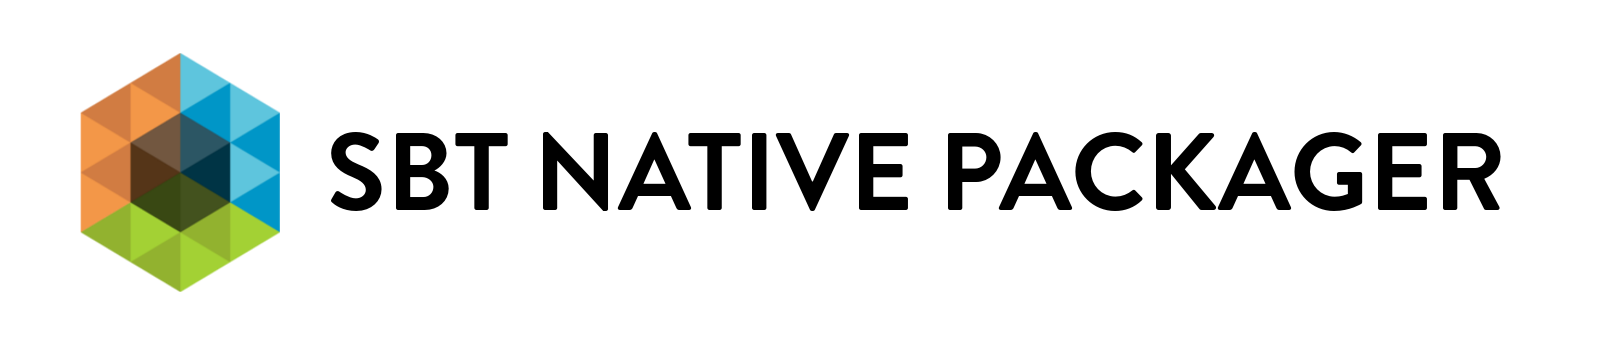 SBT Native Packager Logo